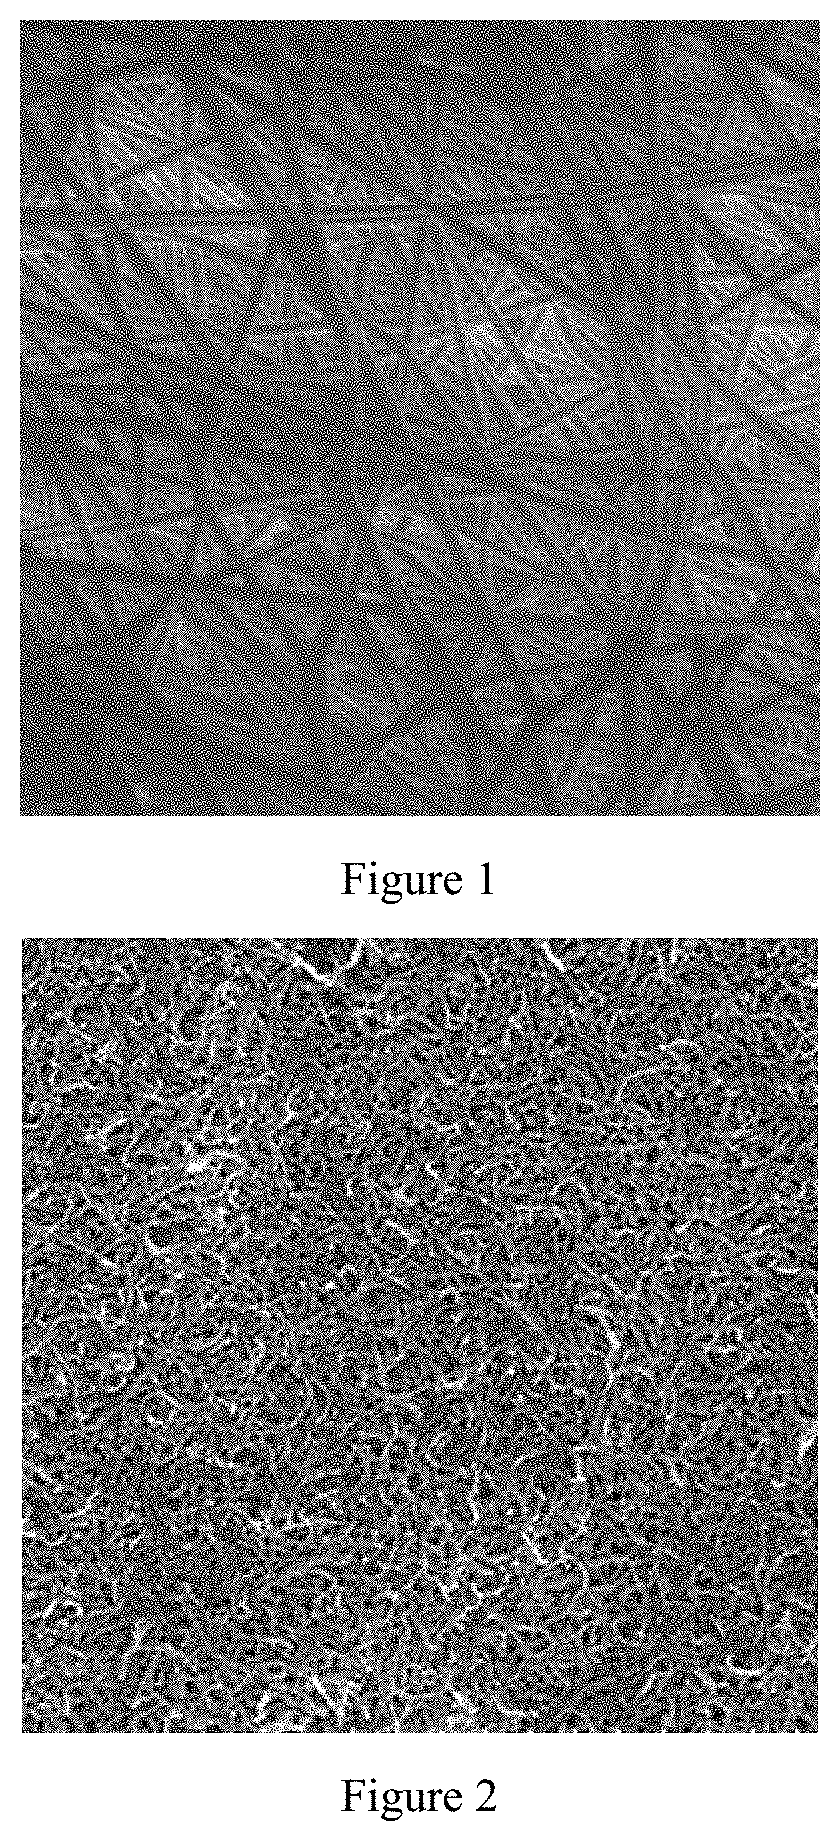 Carbon nanotube/nanofiber conductive composite membrane and preparation method thereof